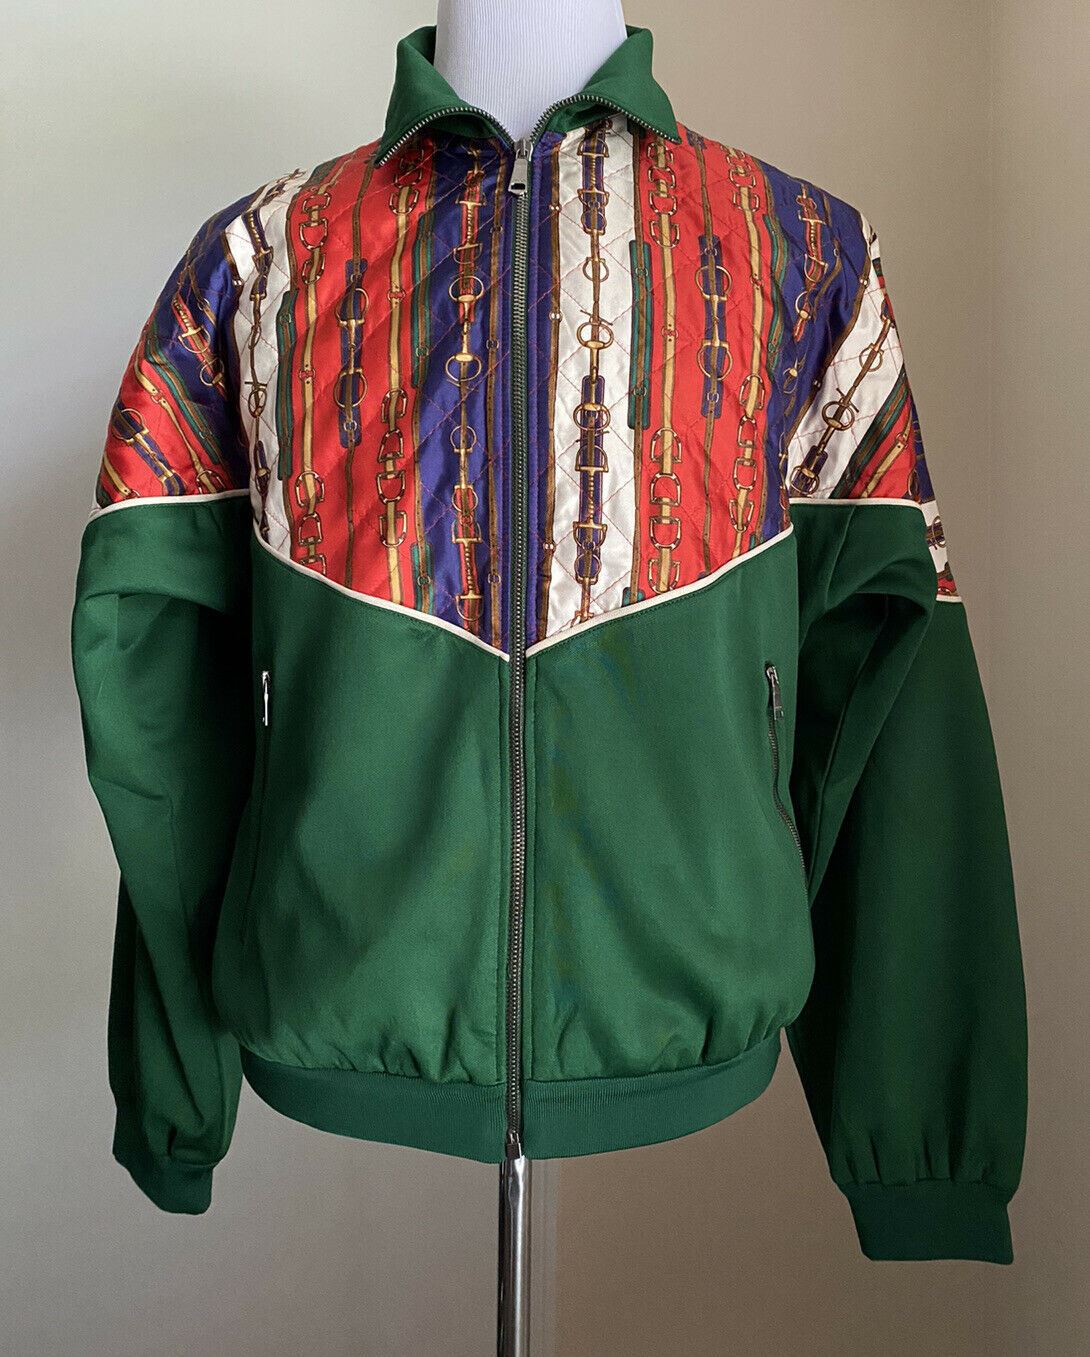 Neu mit Etikett: 2980 $ Gucci Herren-Trainingsjacke, Grün/Mehrfarbig, Größe M, Italien